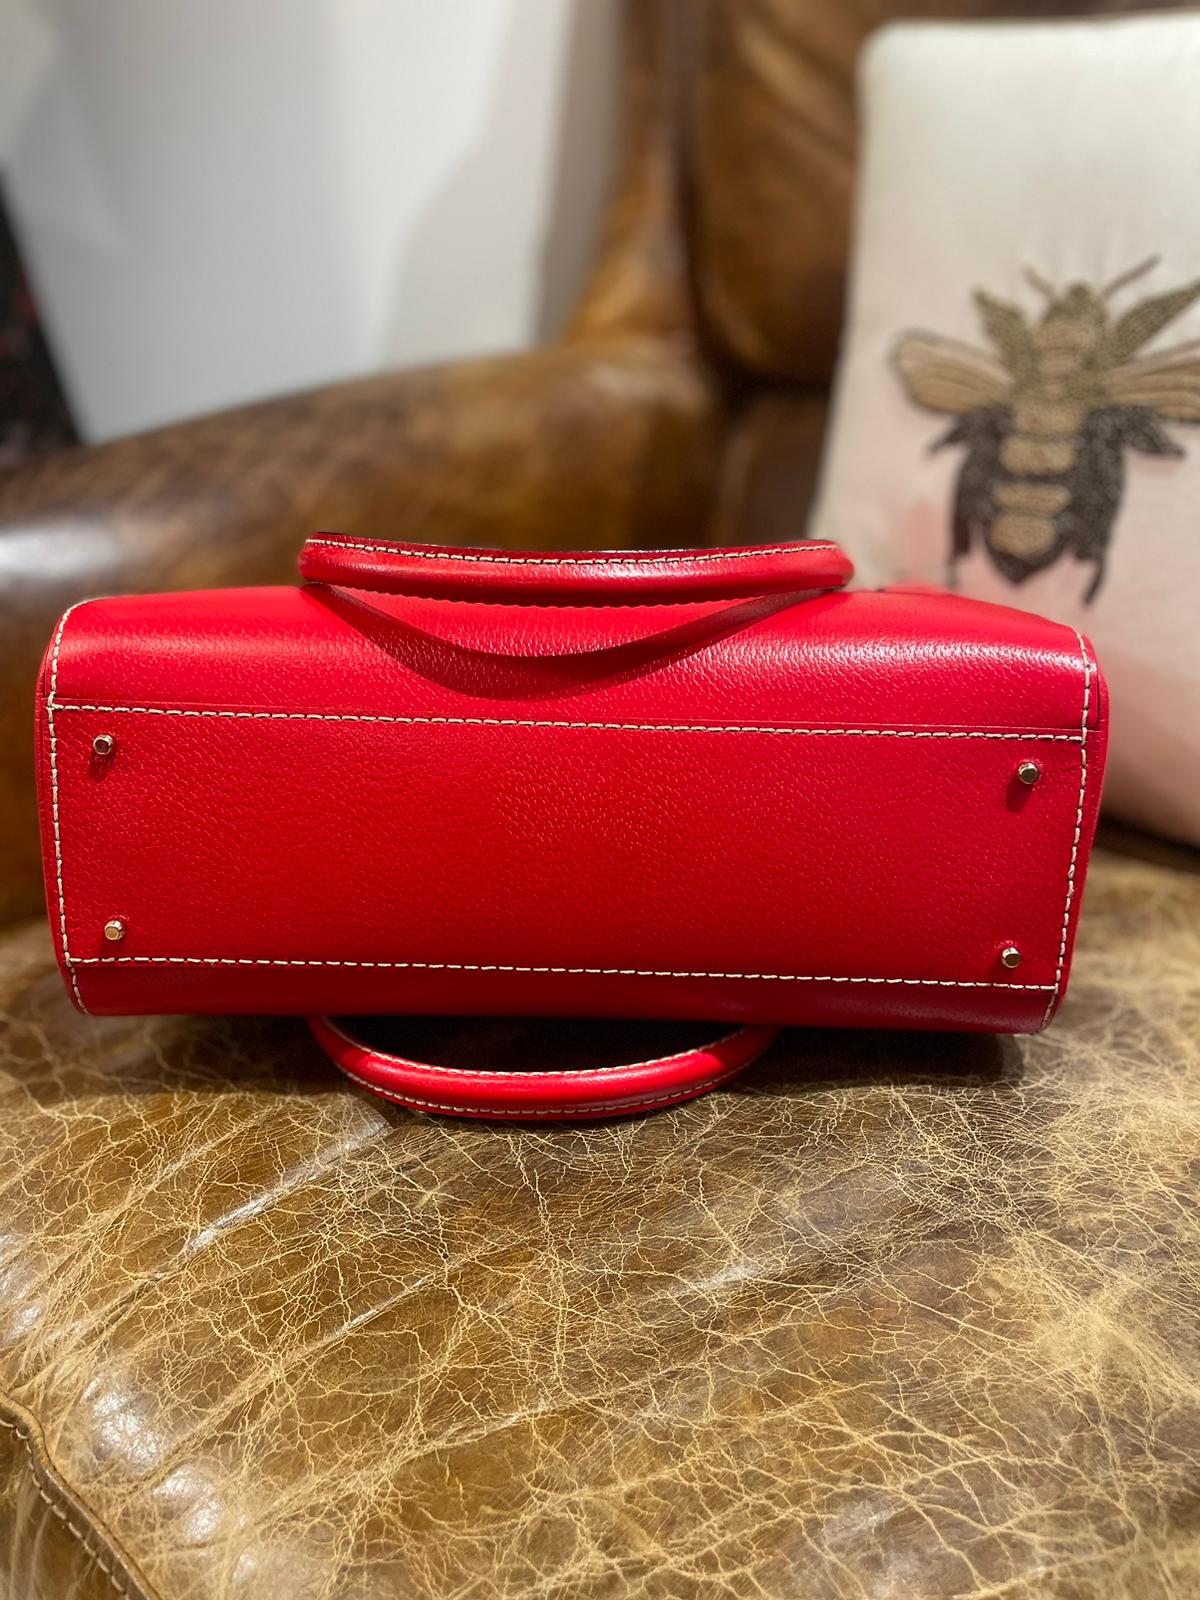 Brand new Kate spade red handbag